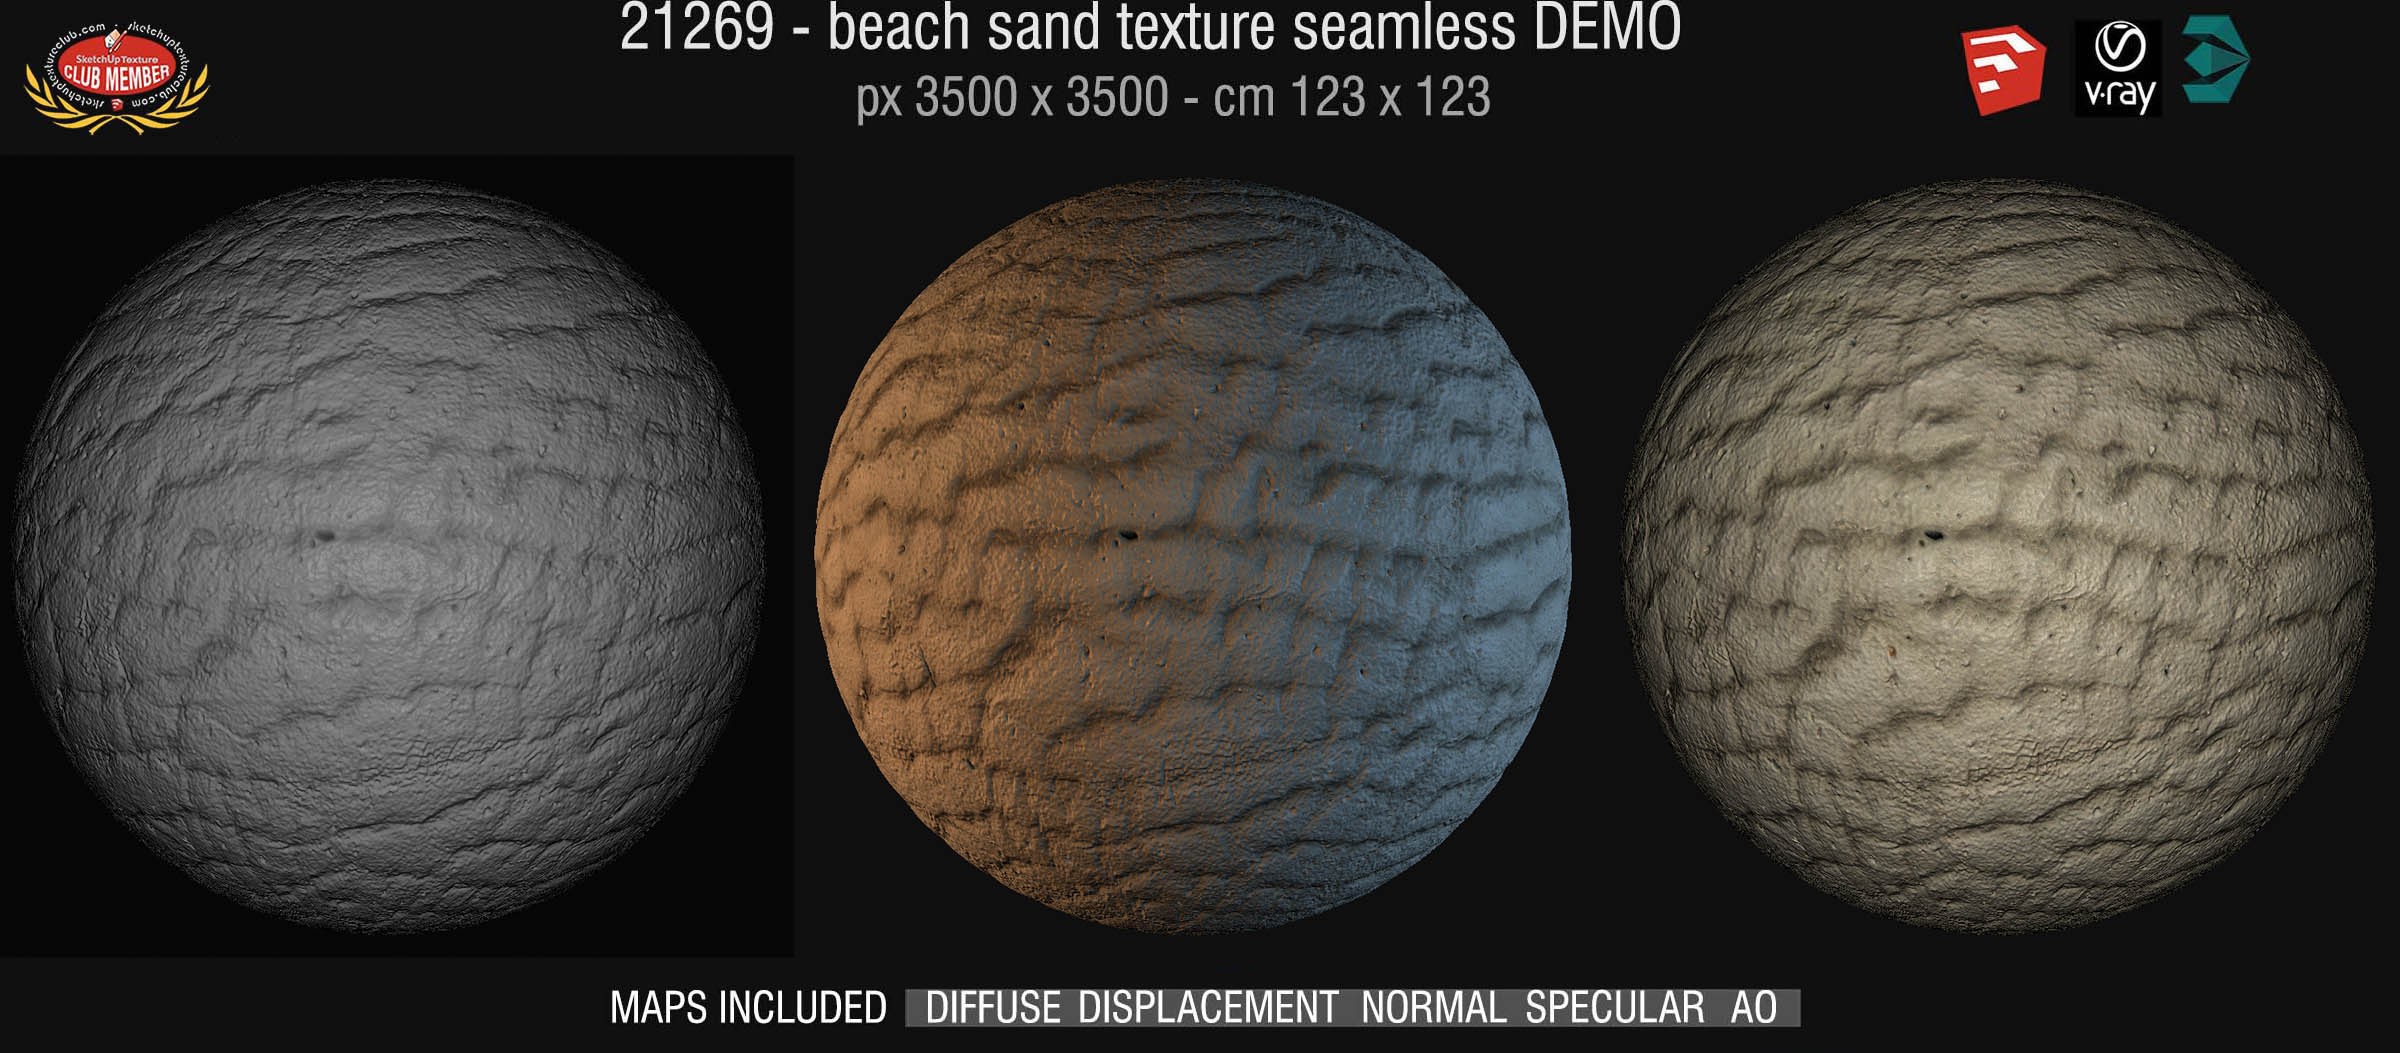 21269 Beach sand texture + maps DEMO